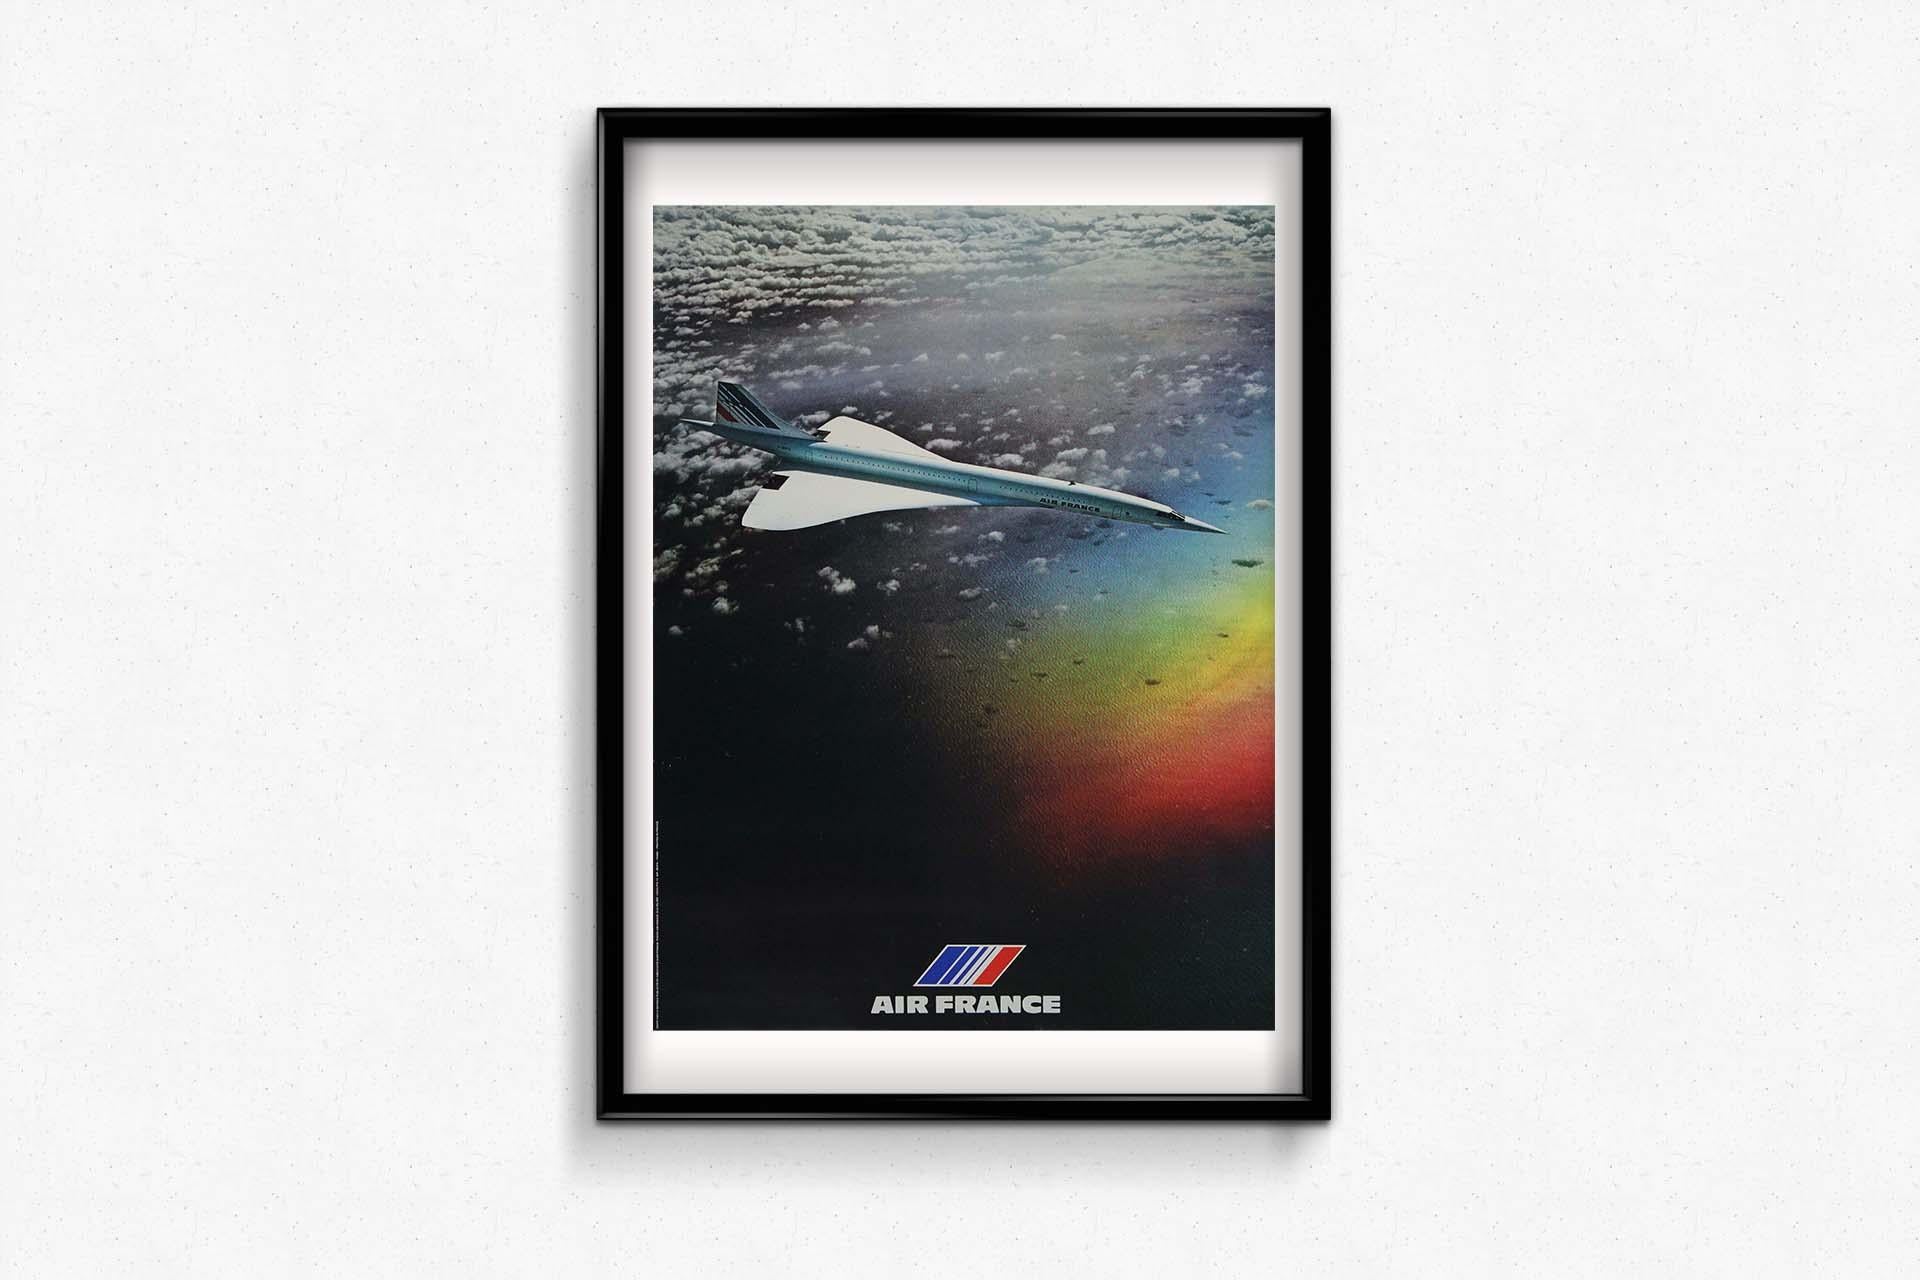 1977 original photo poster by Bulté showcasing the Air France Concorde For Sale 1